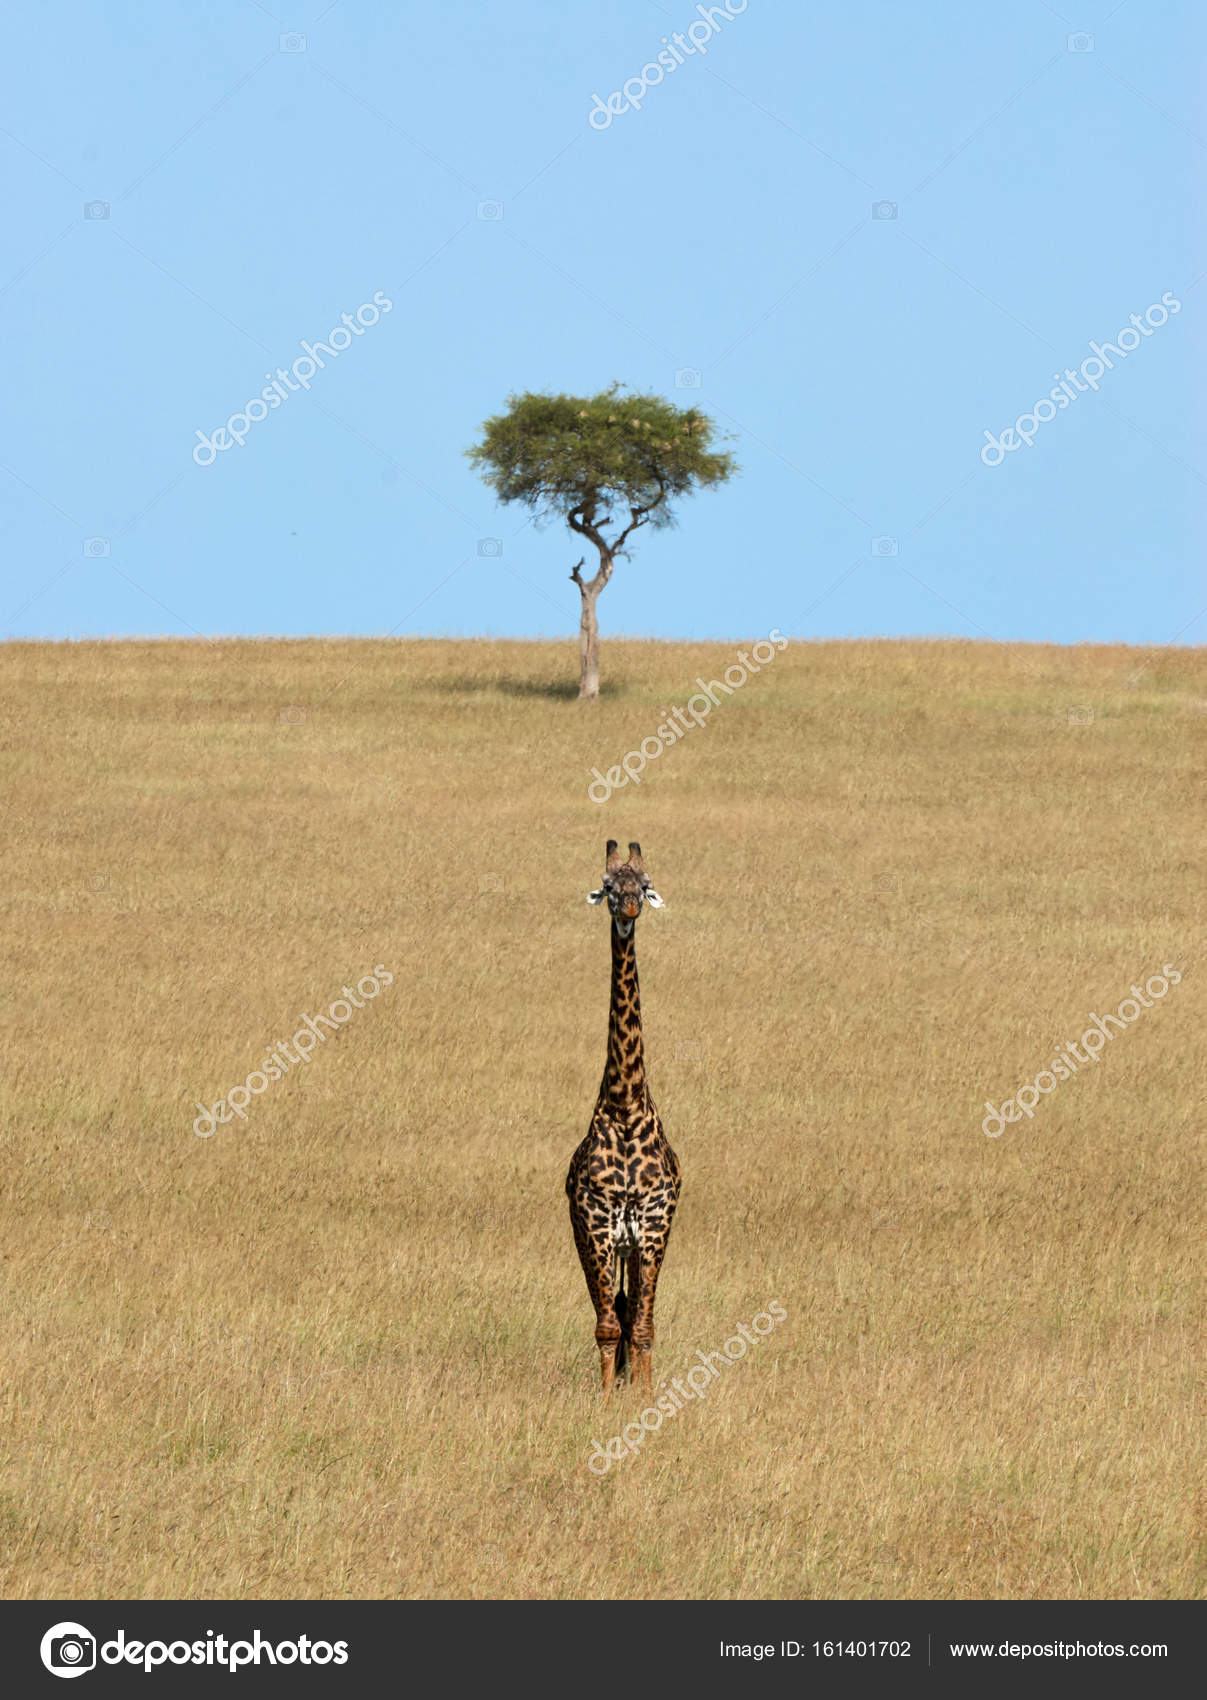 Lonely Giraffe in Kenya — Stock Photo © LuaAr #161401702